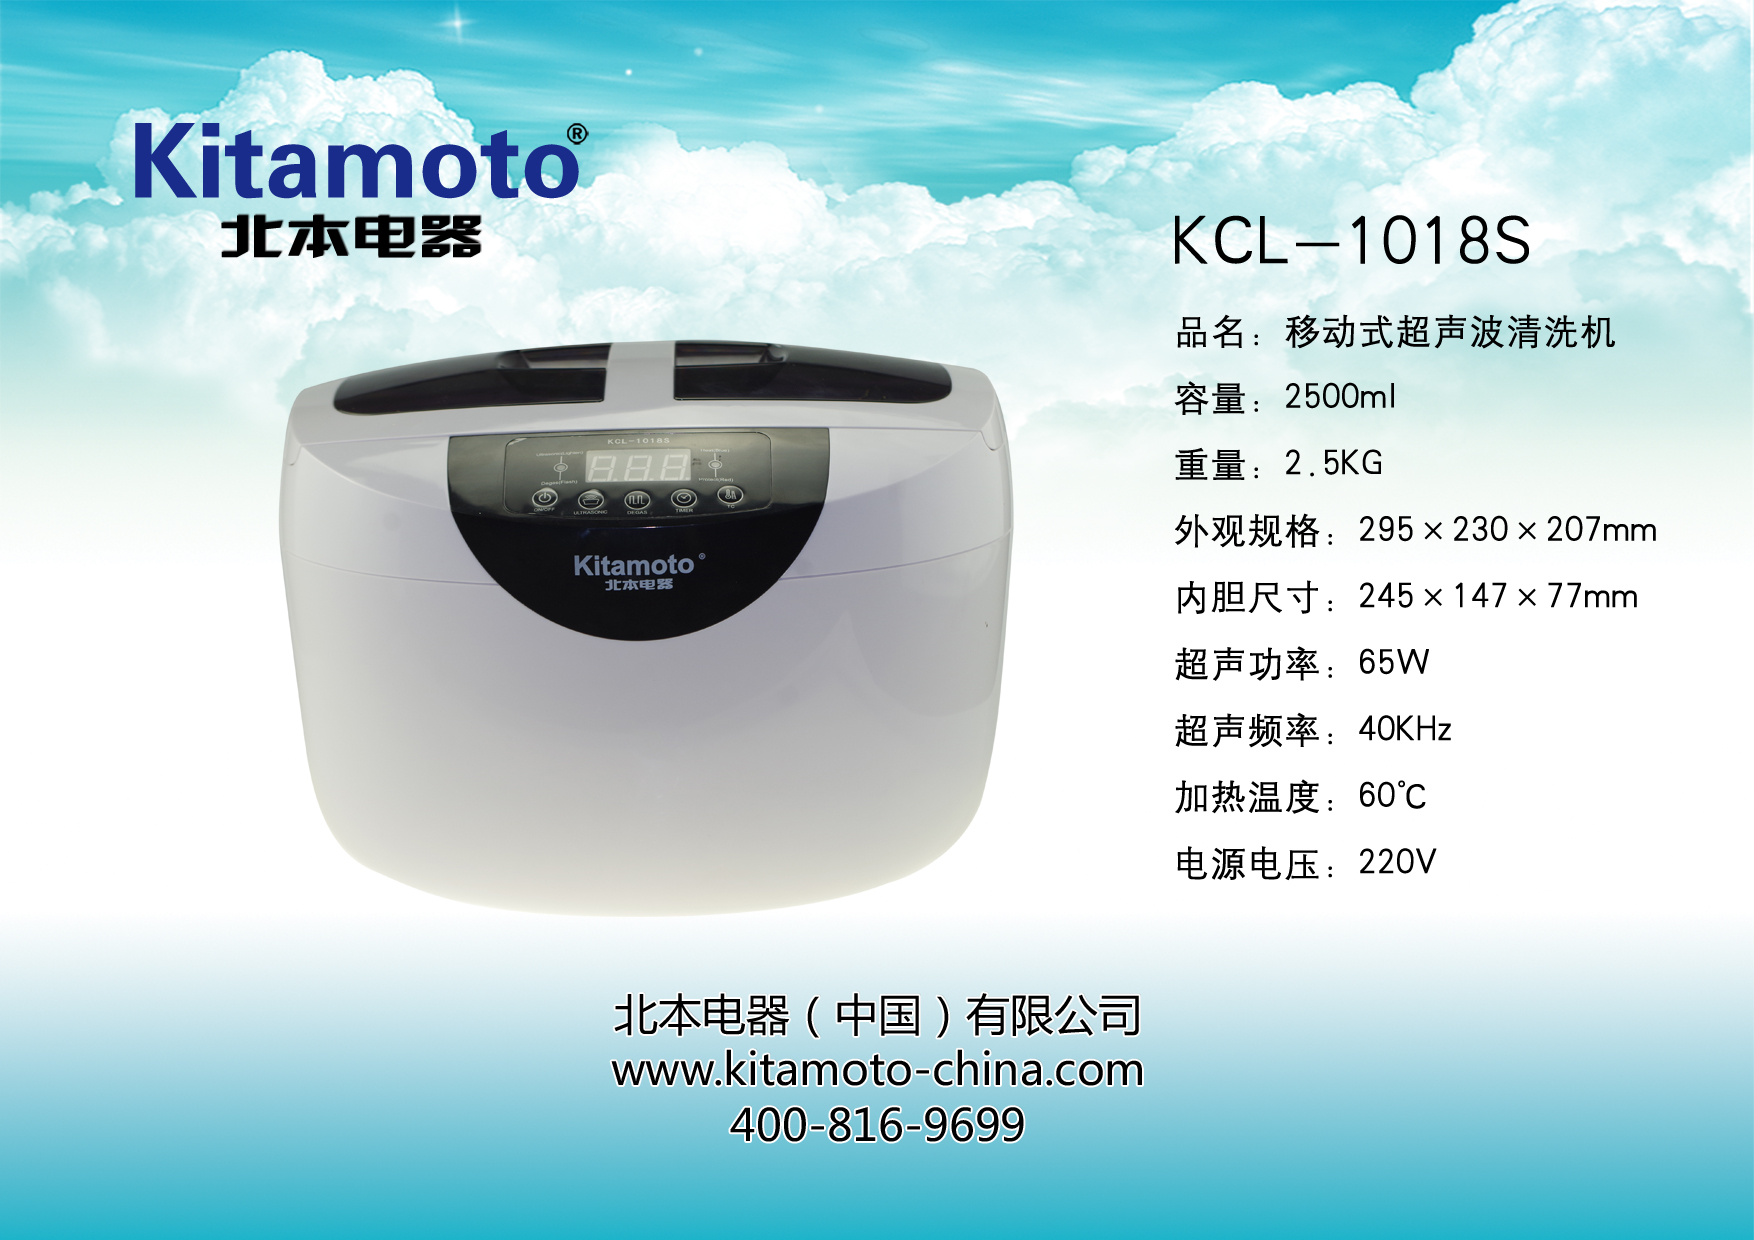 KCL-1018S